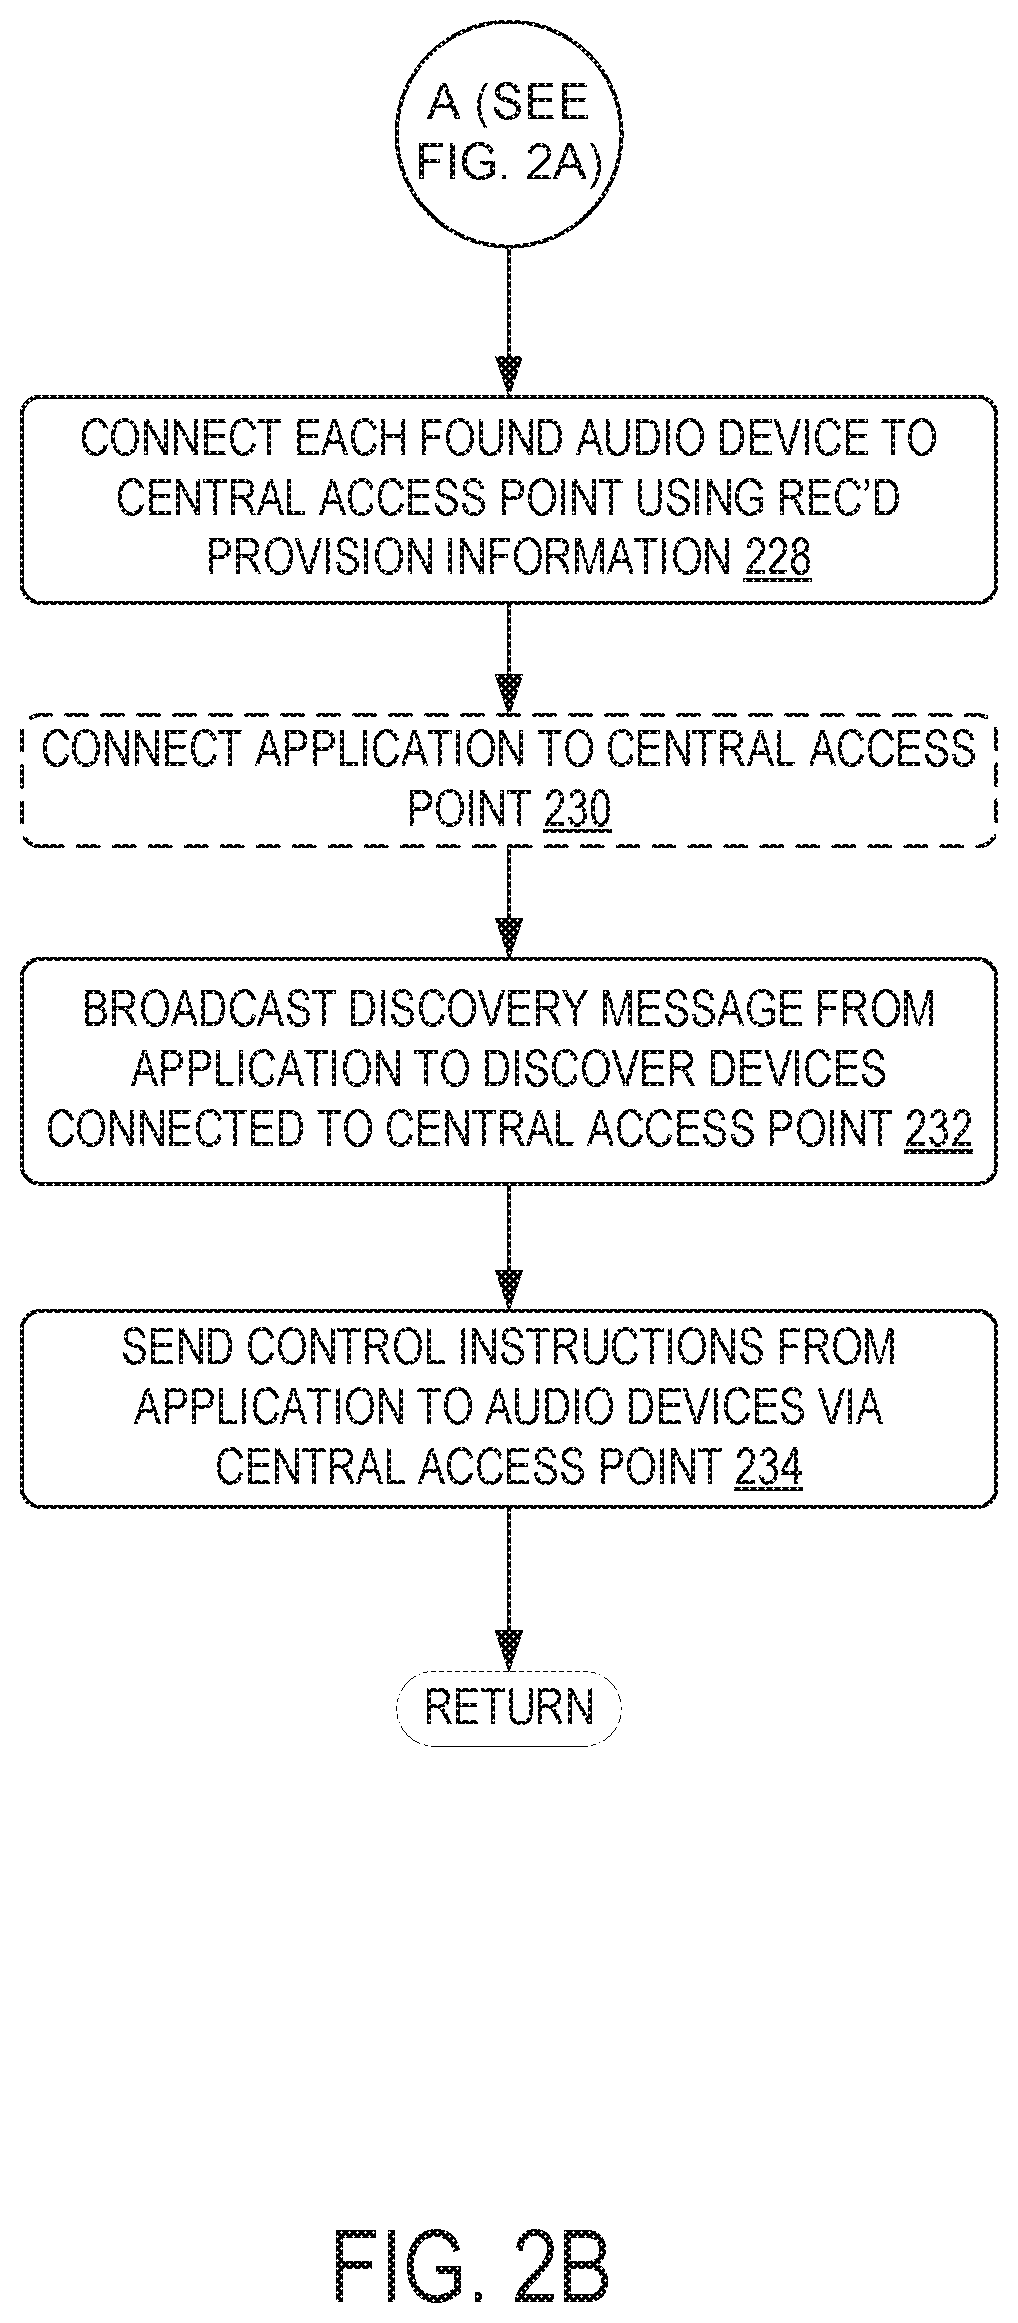 Wireless audio device provisioning